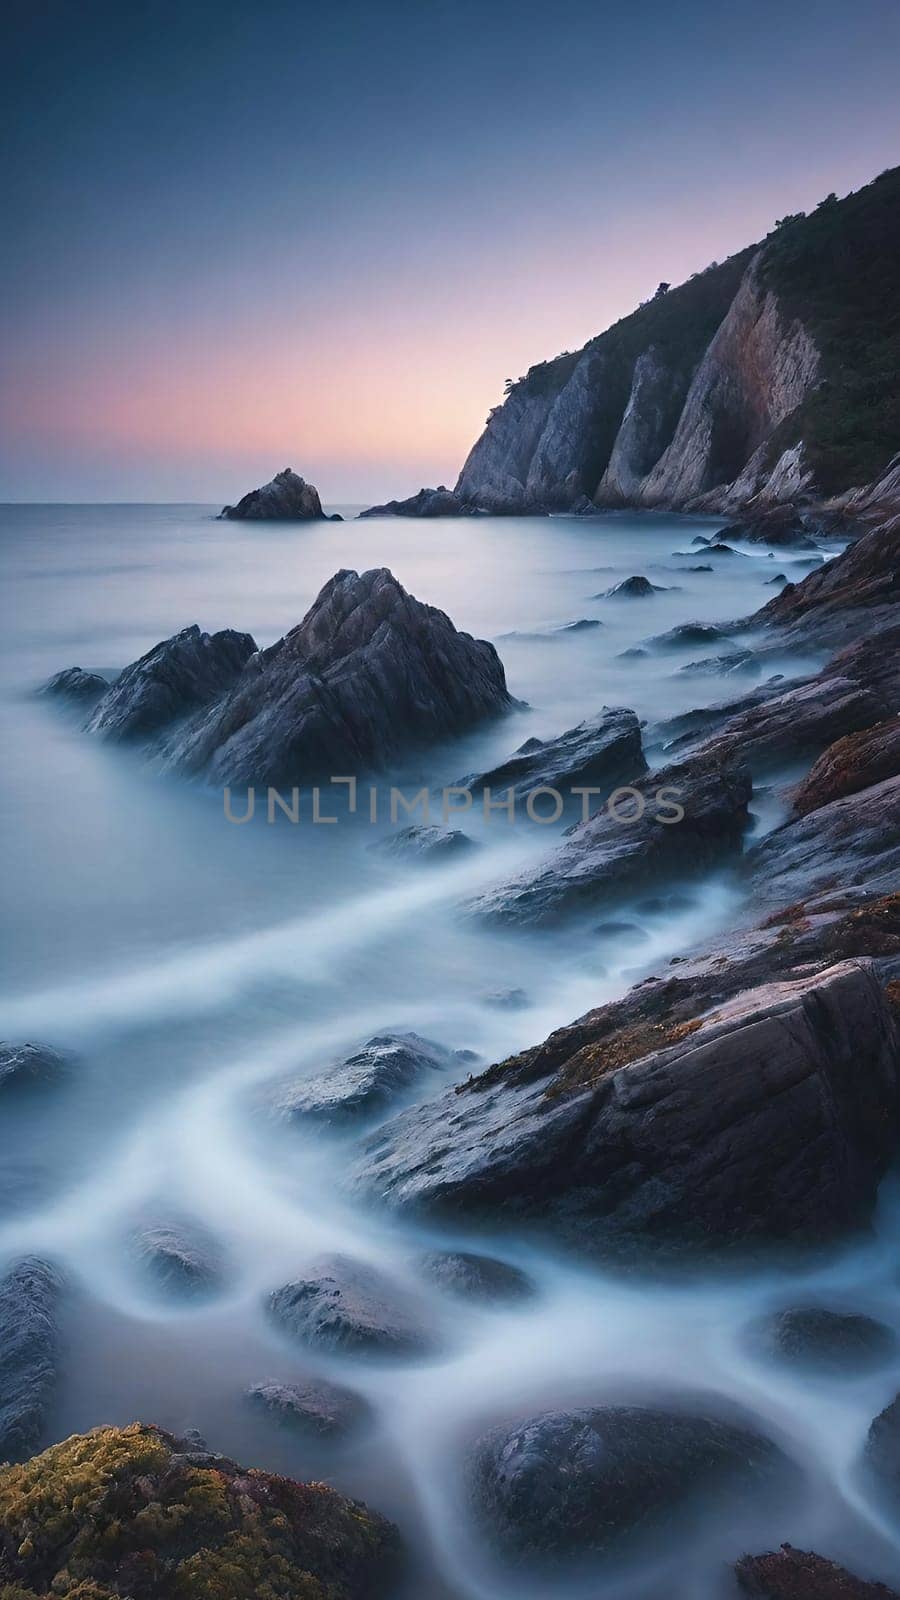 Long exposure image of a long exposure of the sea and rocks at sunset by yilmazsavaskandag